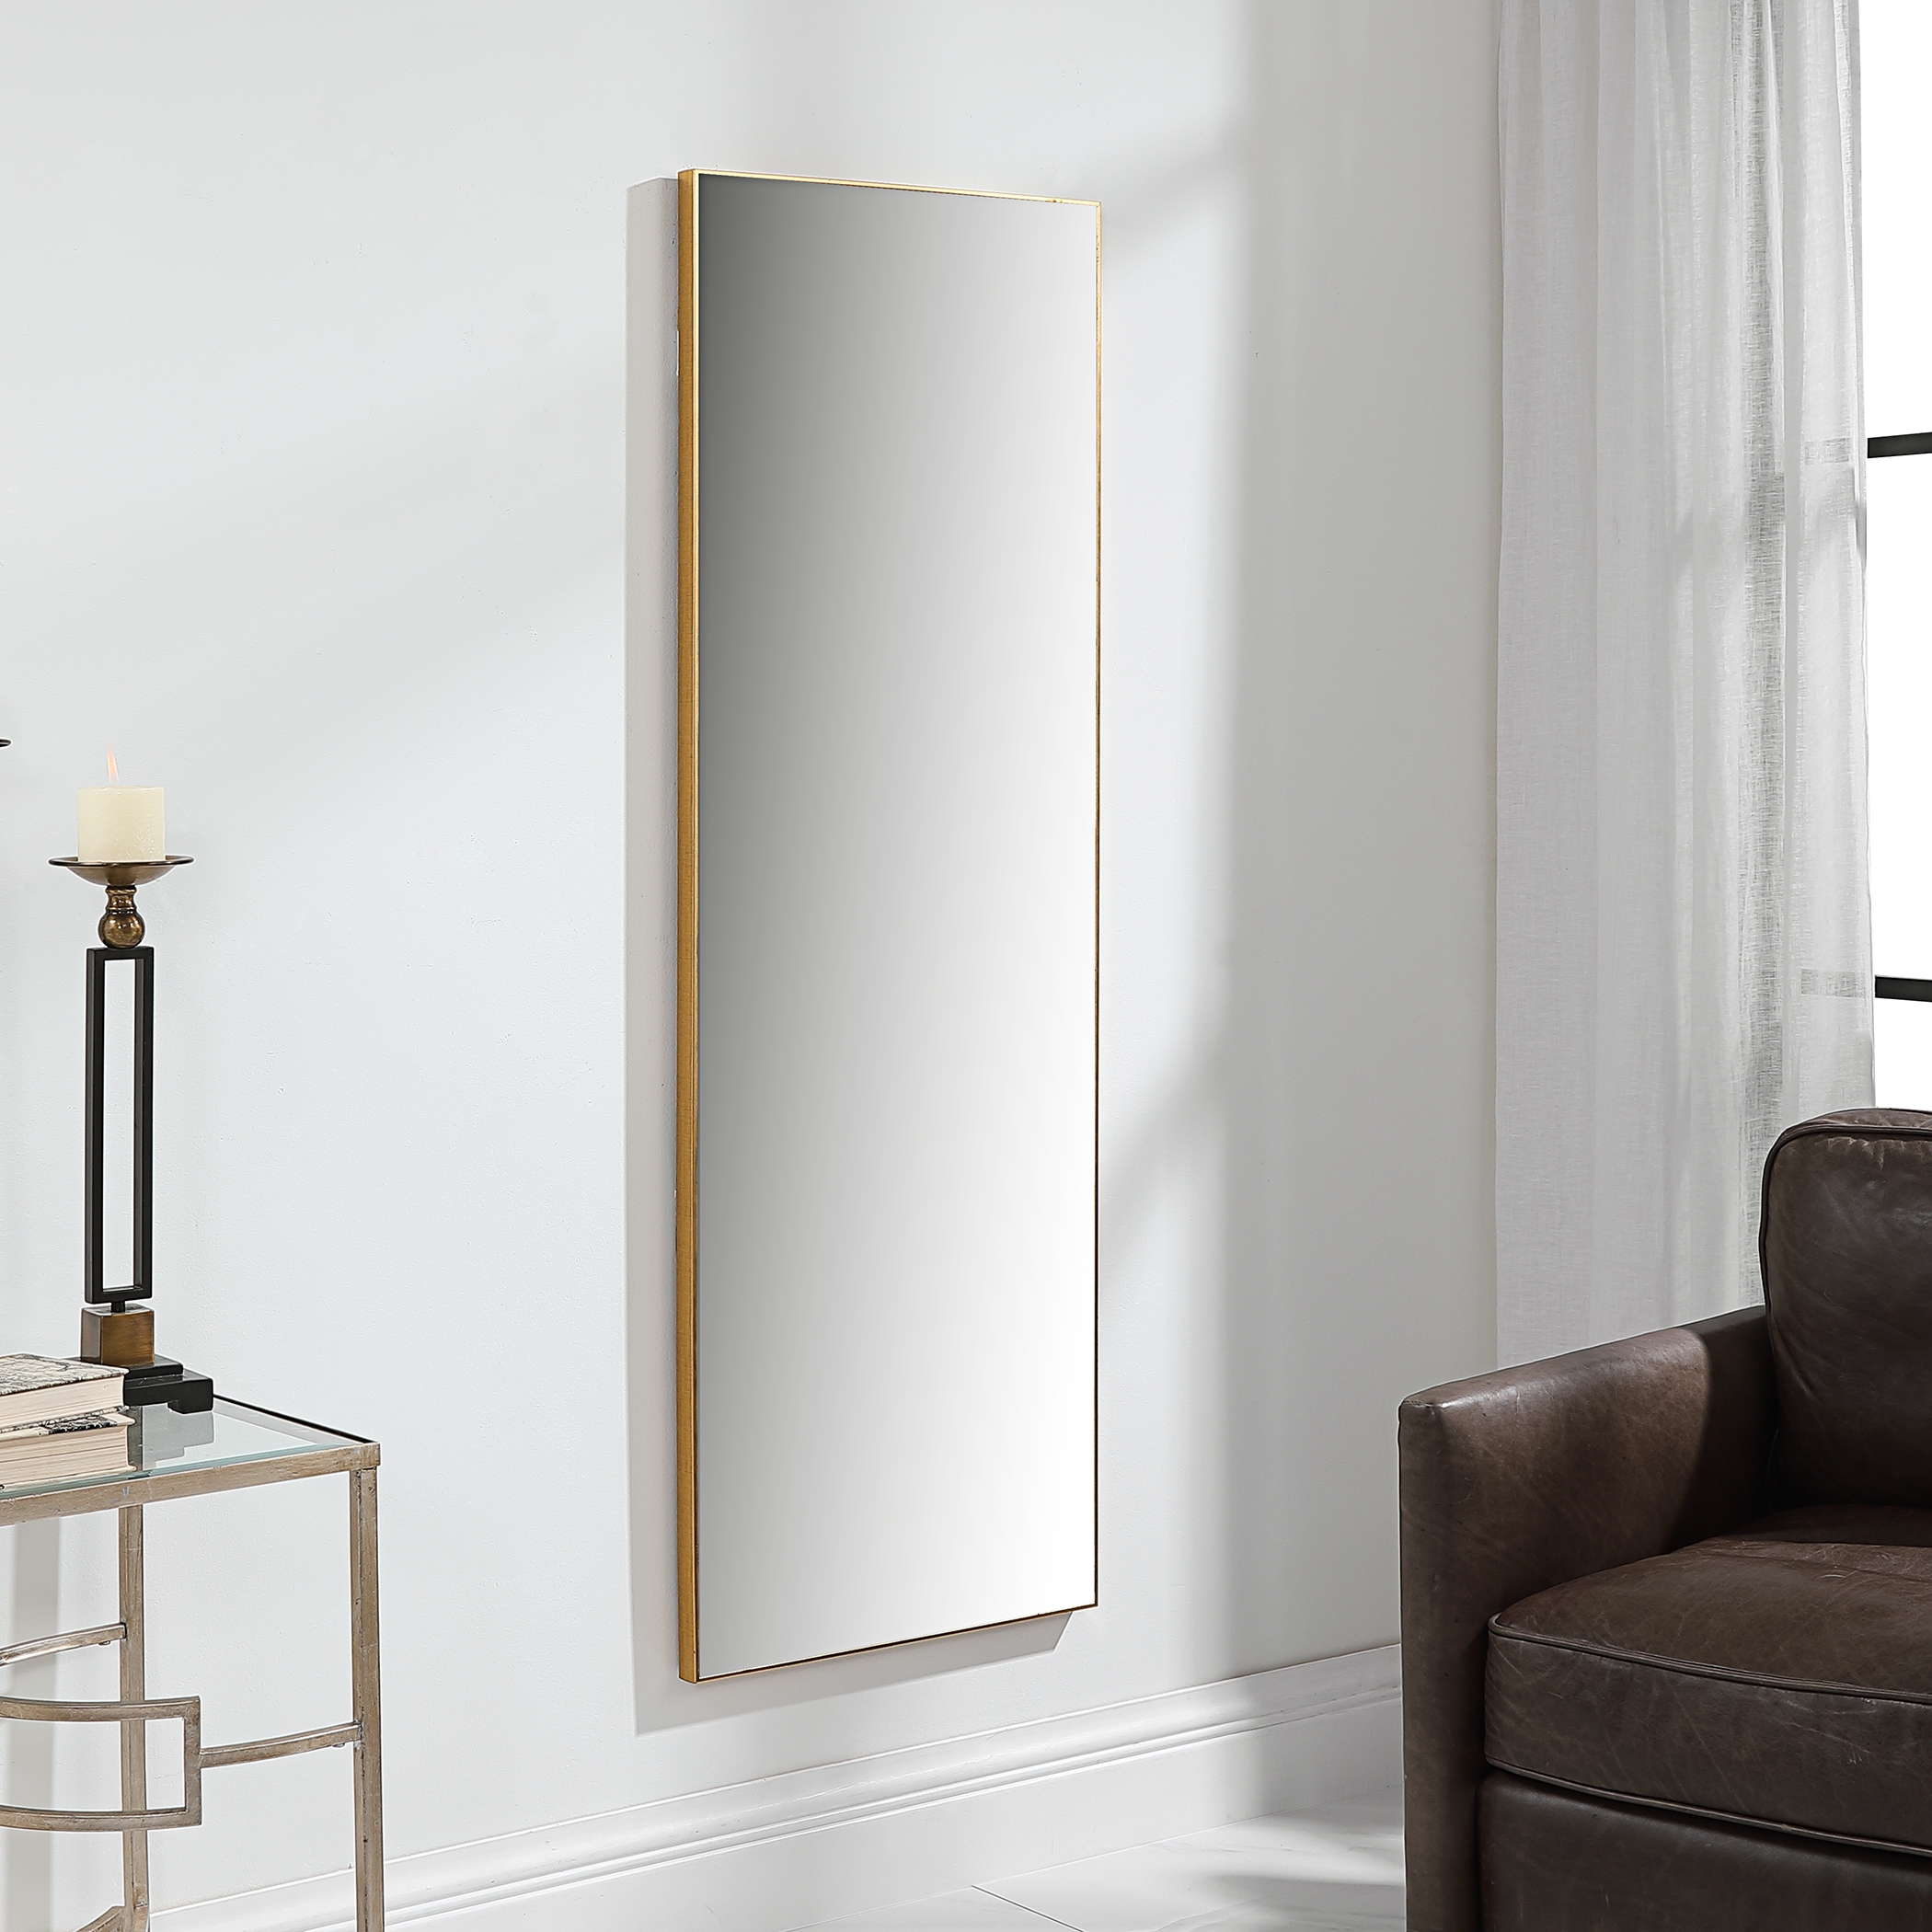 19.53" x 59.53" Thin Frame Mirror, Gold - Image 4